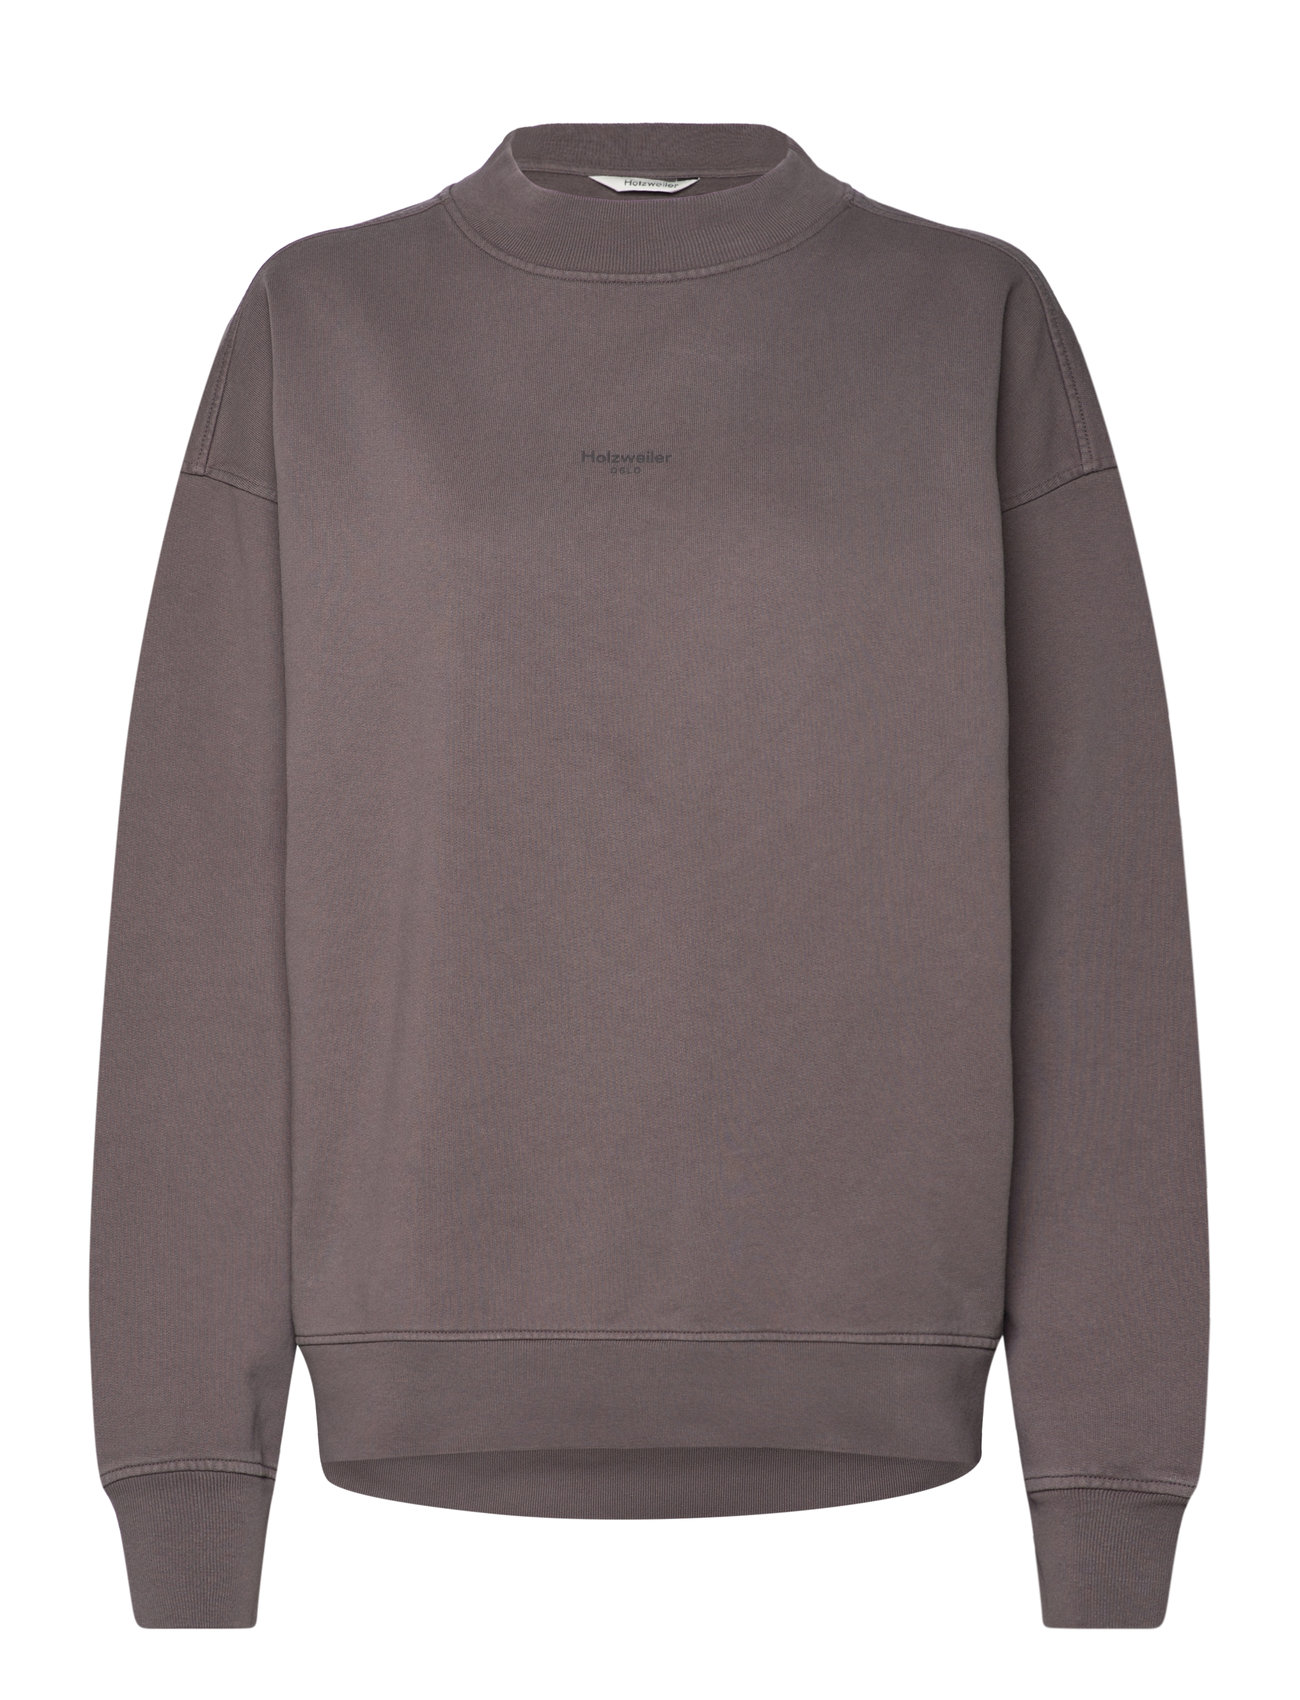 W. Mezzanine Oslo Crew Tops Sweatshirts & Hoodies Sweatshirts Grey HOLZWEILER